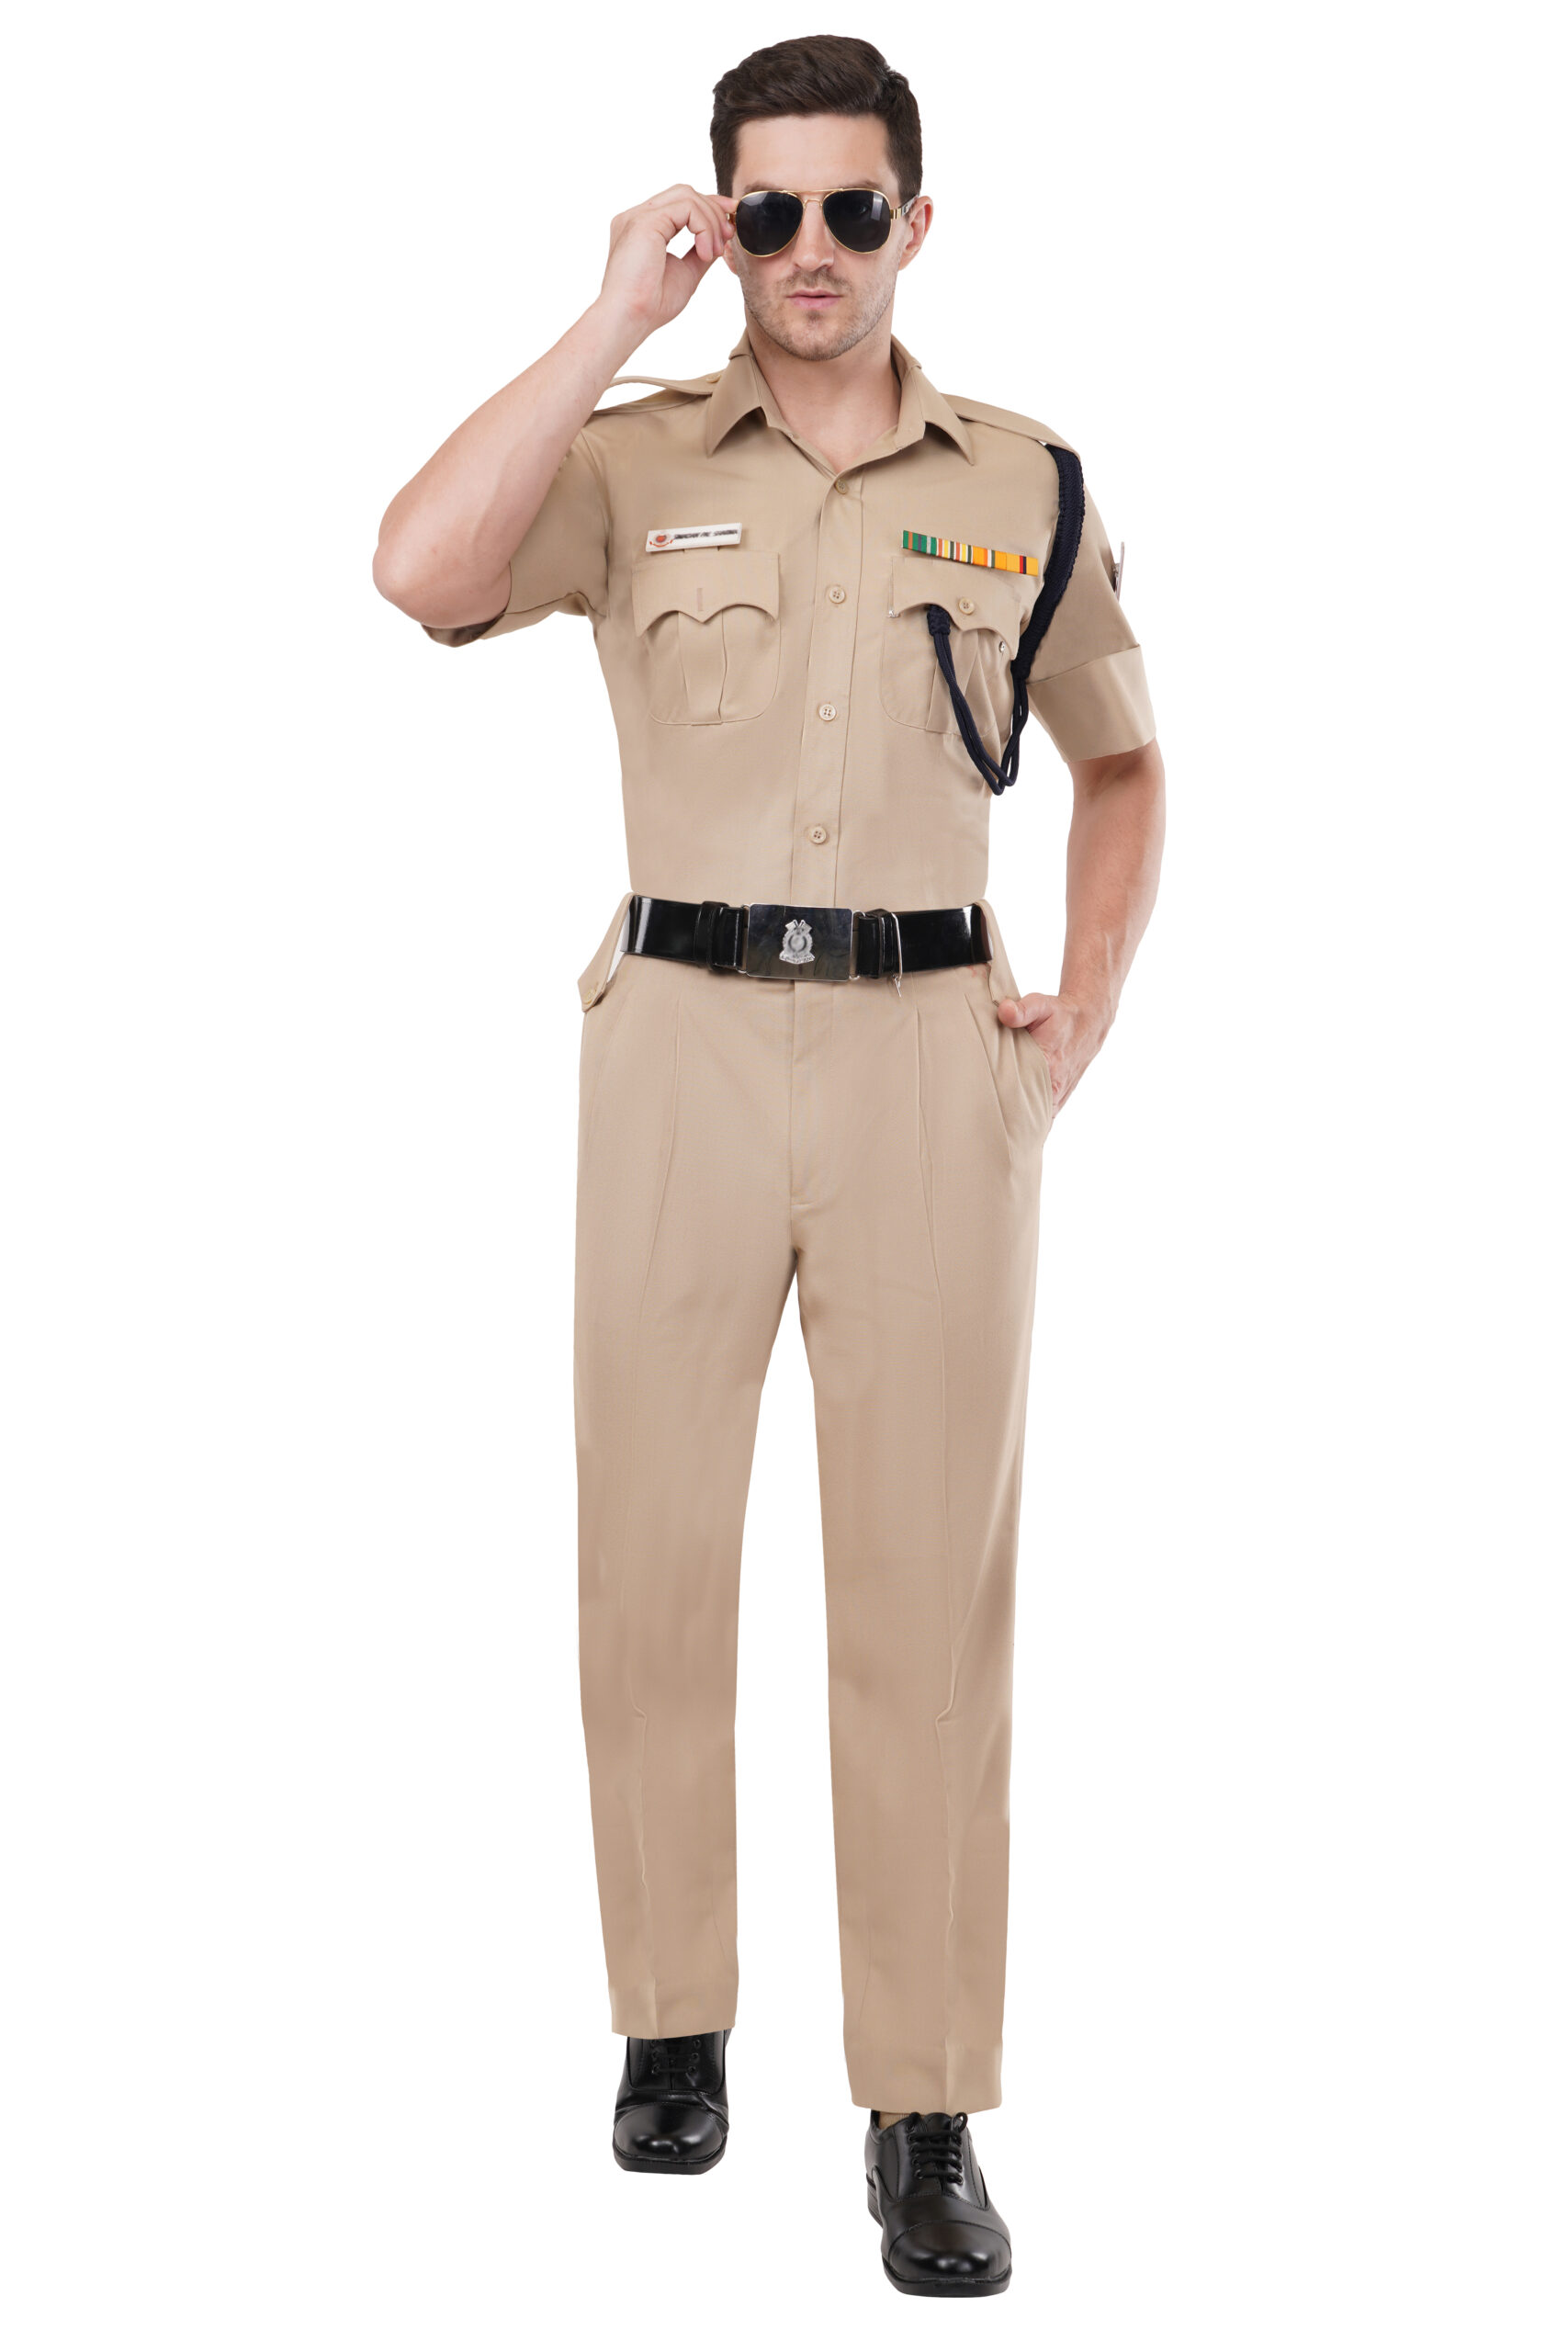 CRPF Khaki Uniform